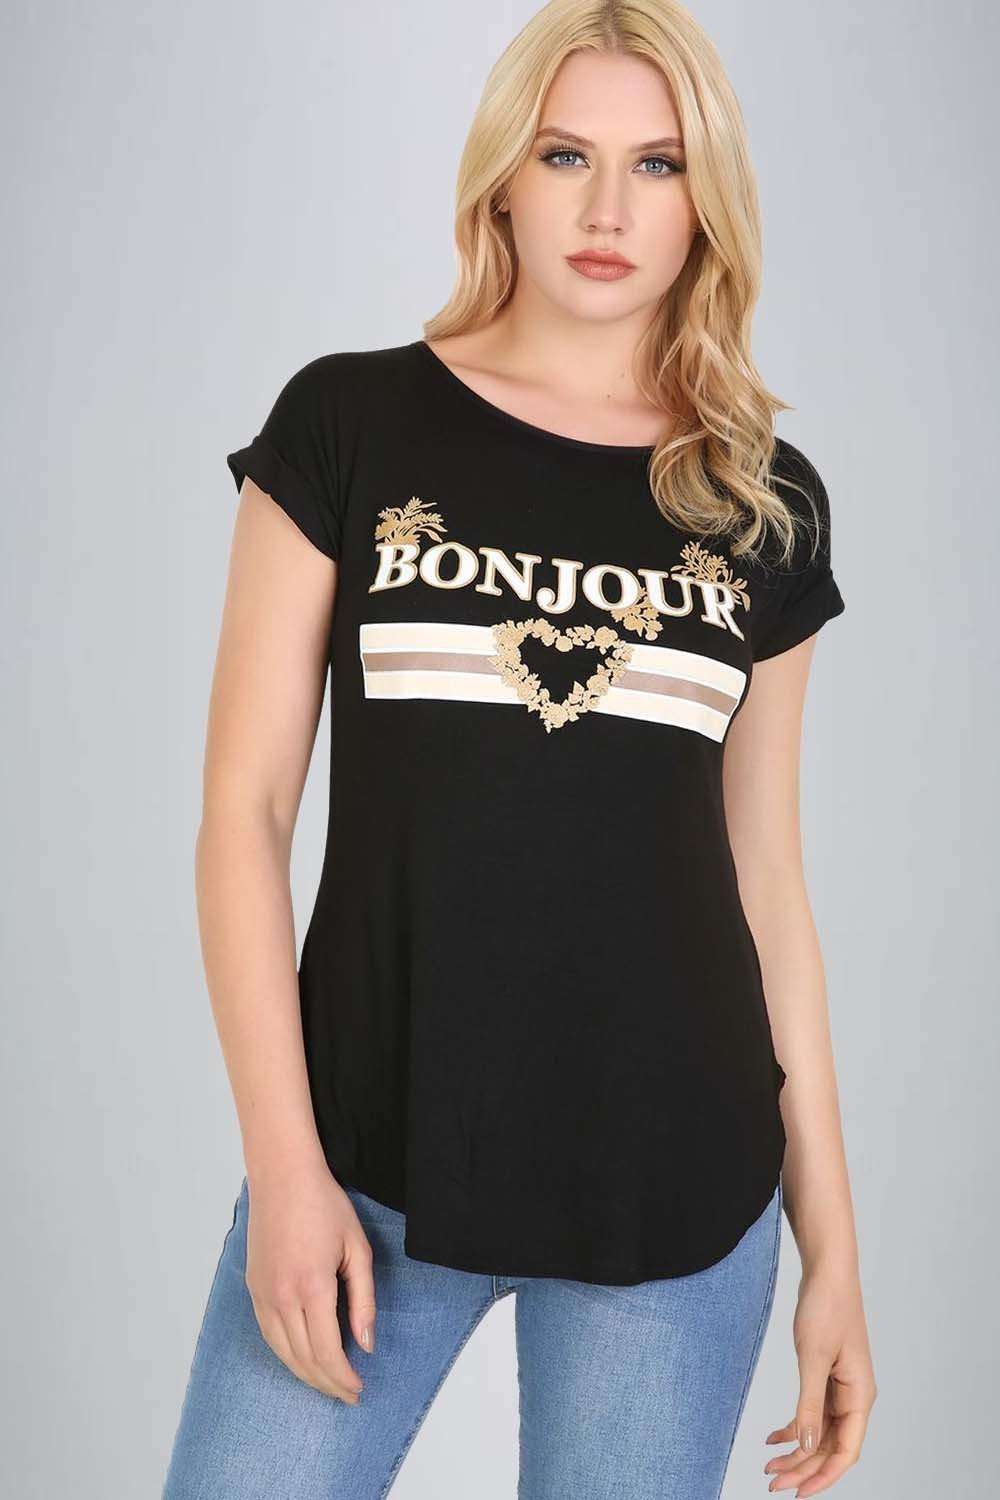 Julia Bonjour Slogan Print Curved Hem Tshirt - bejealous-com